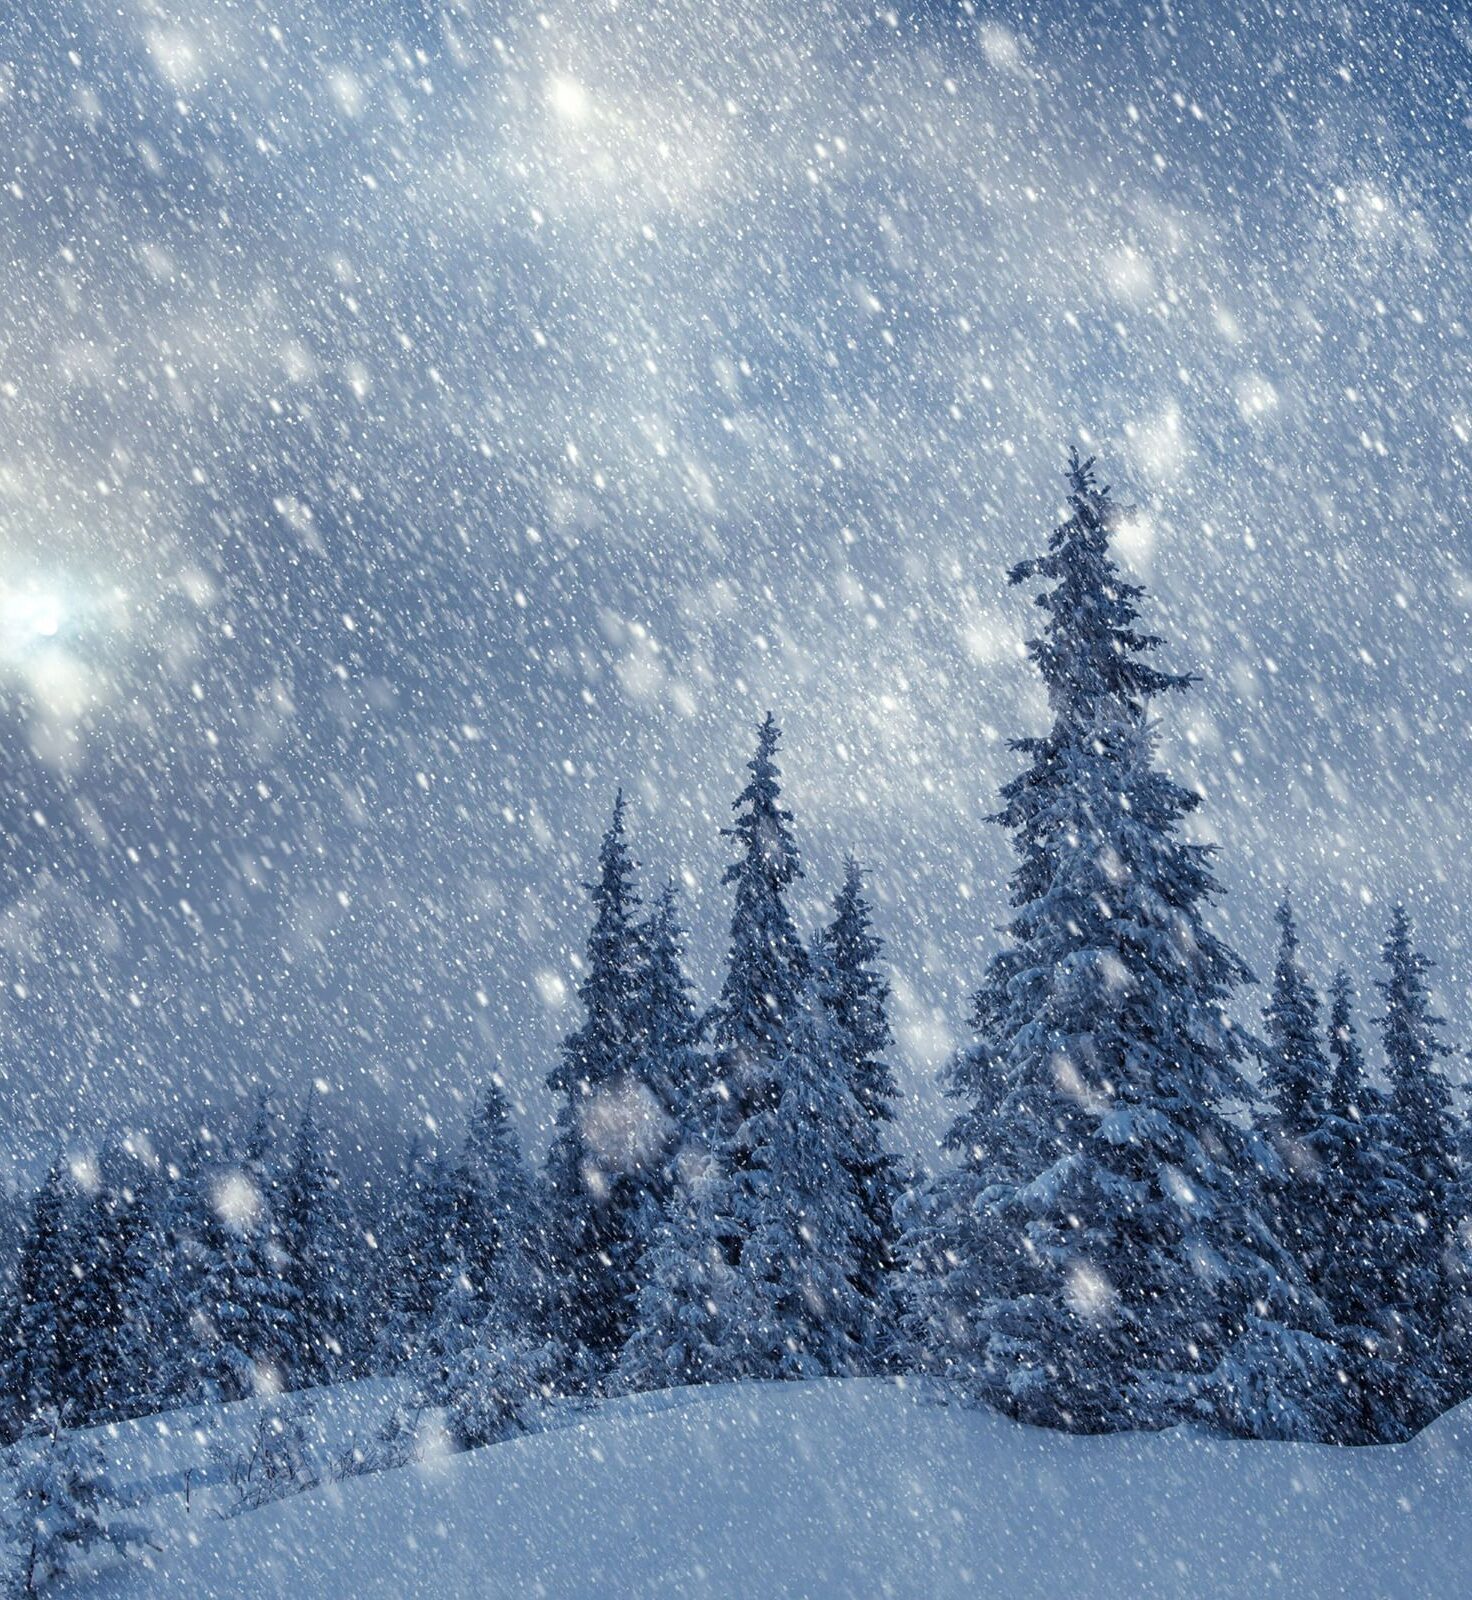 Snow falling around some pine trees